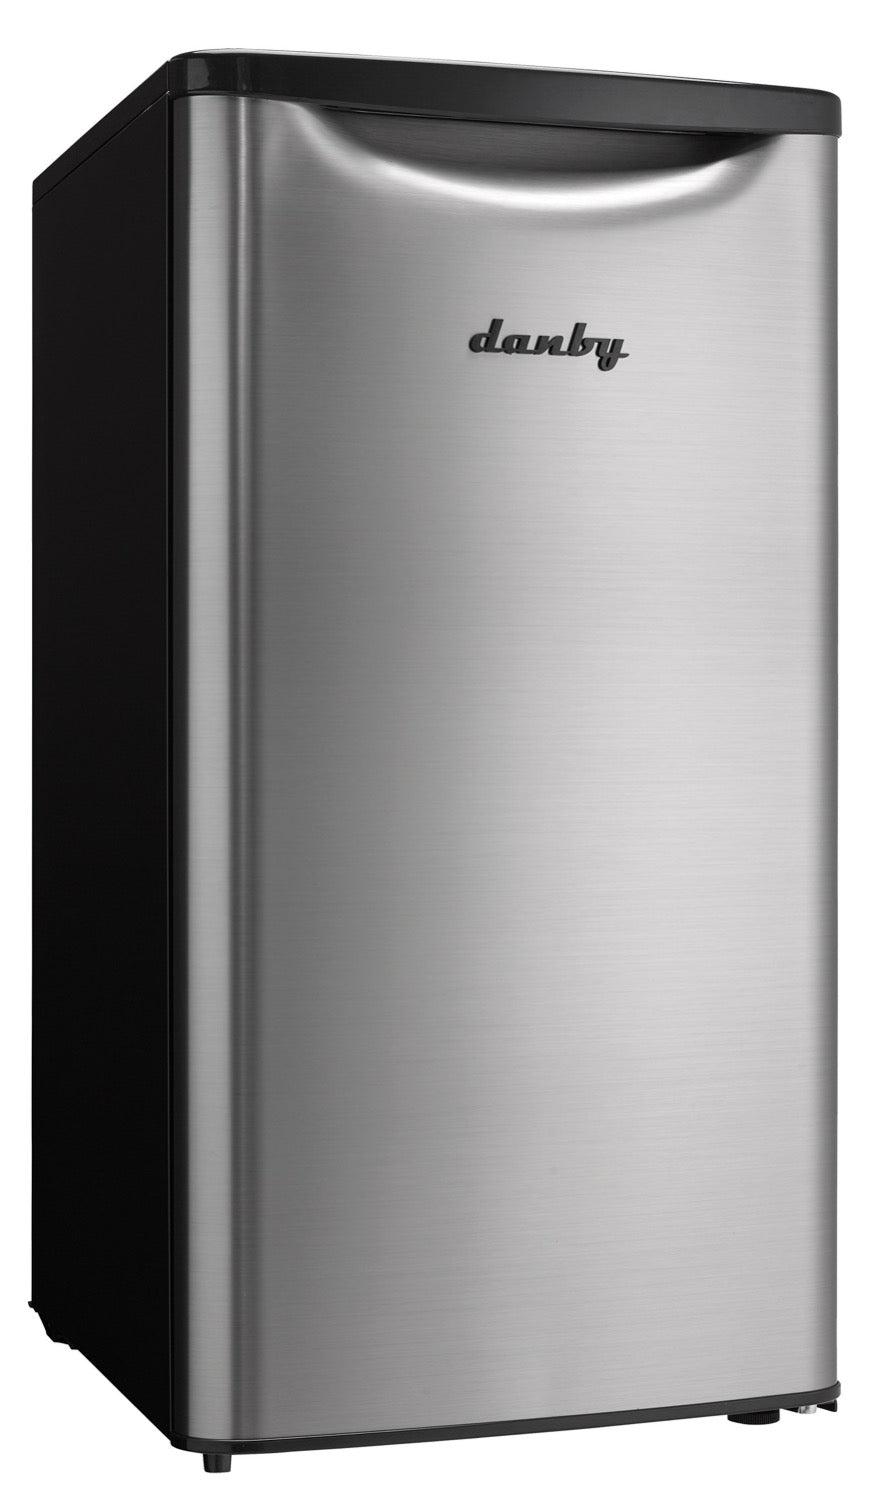 Danby Spotless Steel Contemporary Classic Compact Refrigerator (3.3 Cu.Ft.) - DAR033A6BSLDB-6